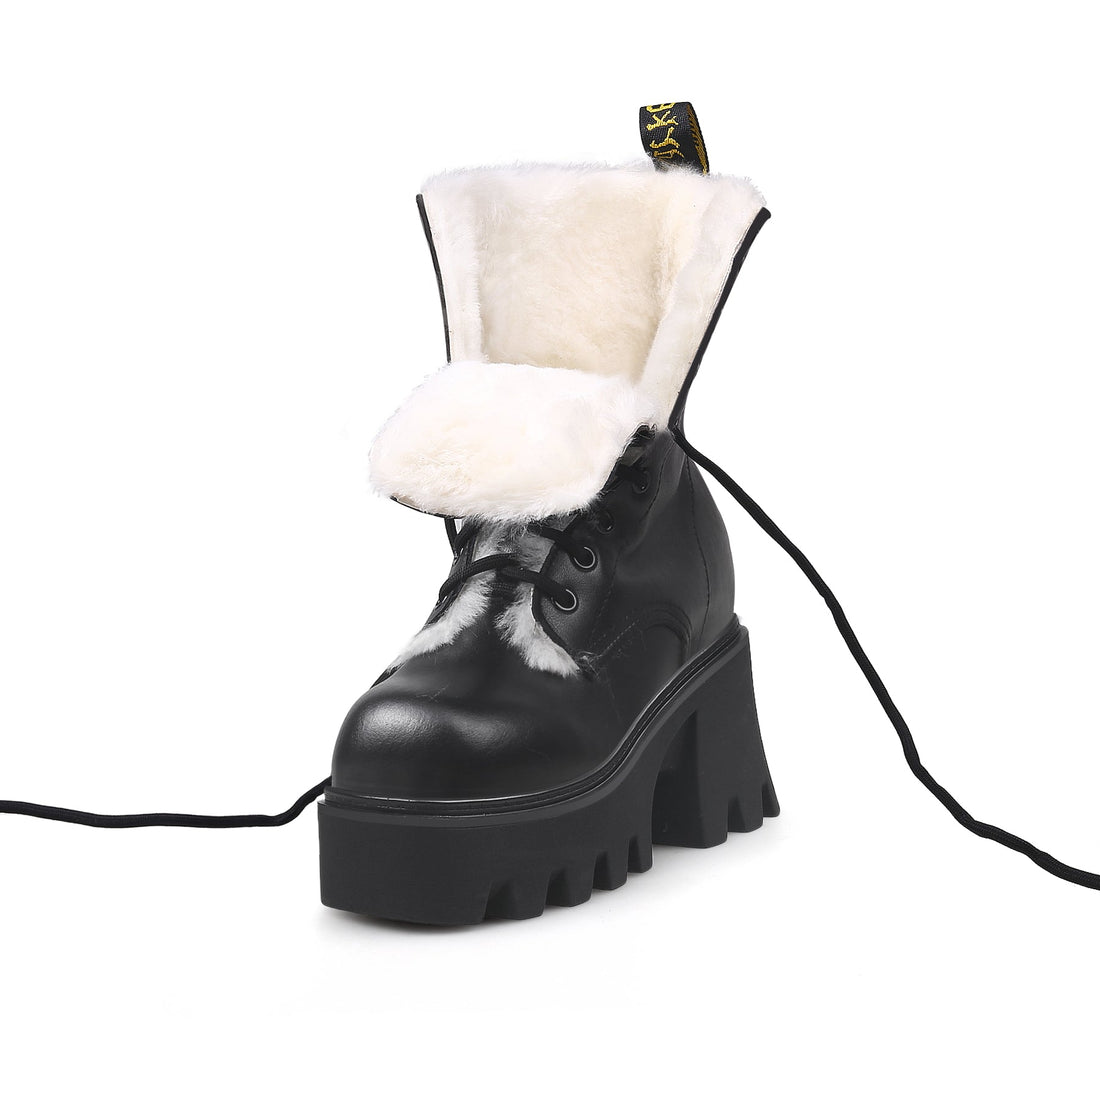 Warm Fluffy Black High Platform Boots - 0cm